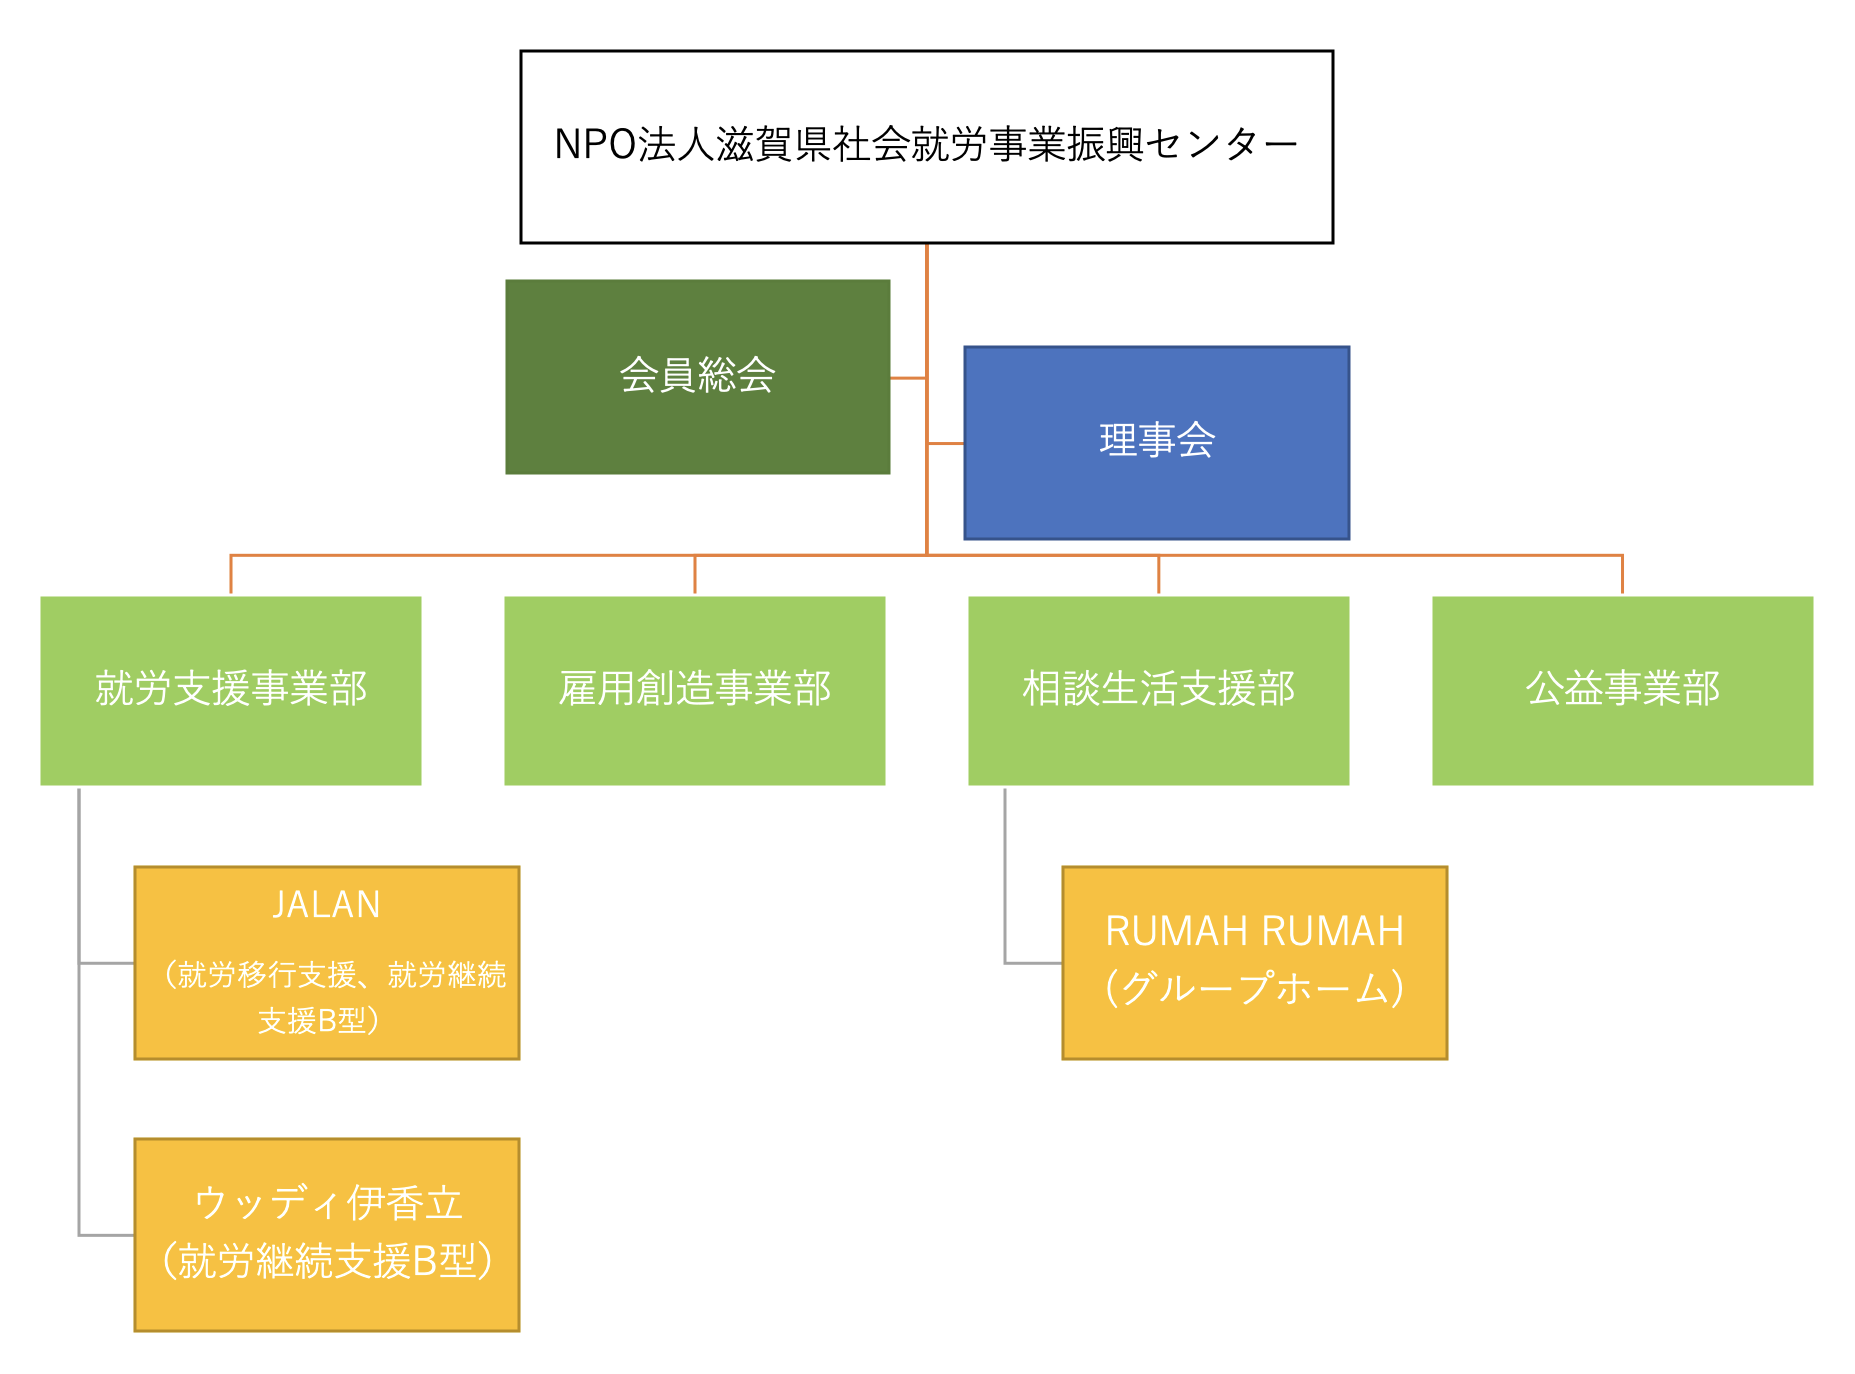 NPO法人滋賀県社会就労事業振興センターの組織図です。